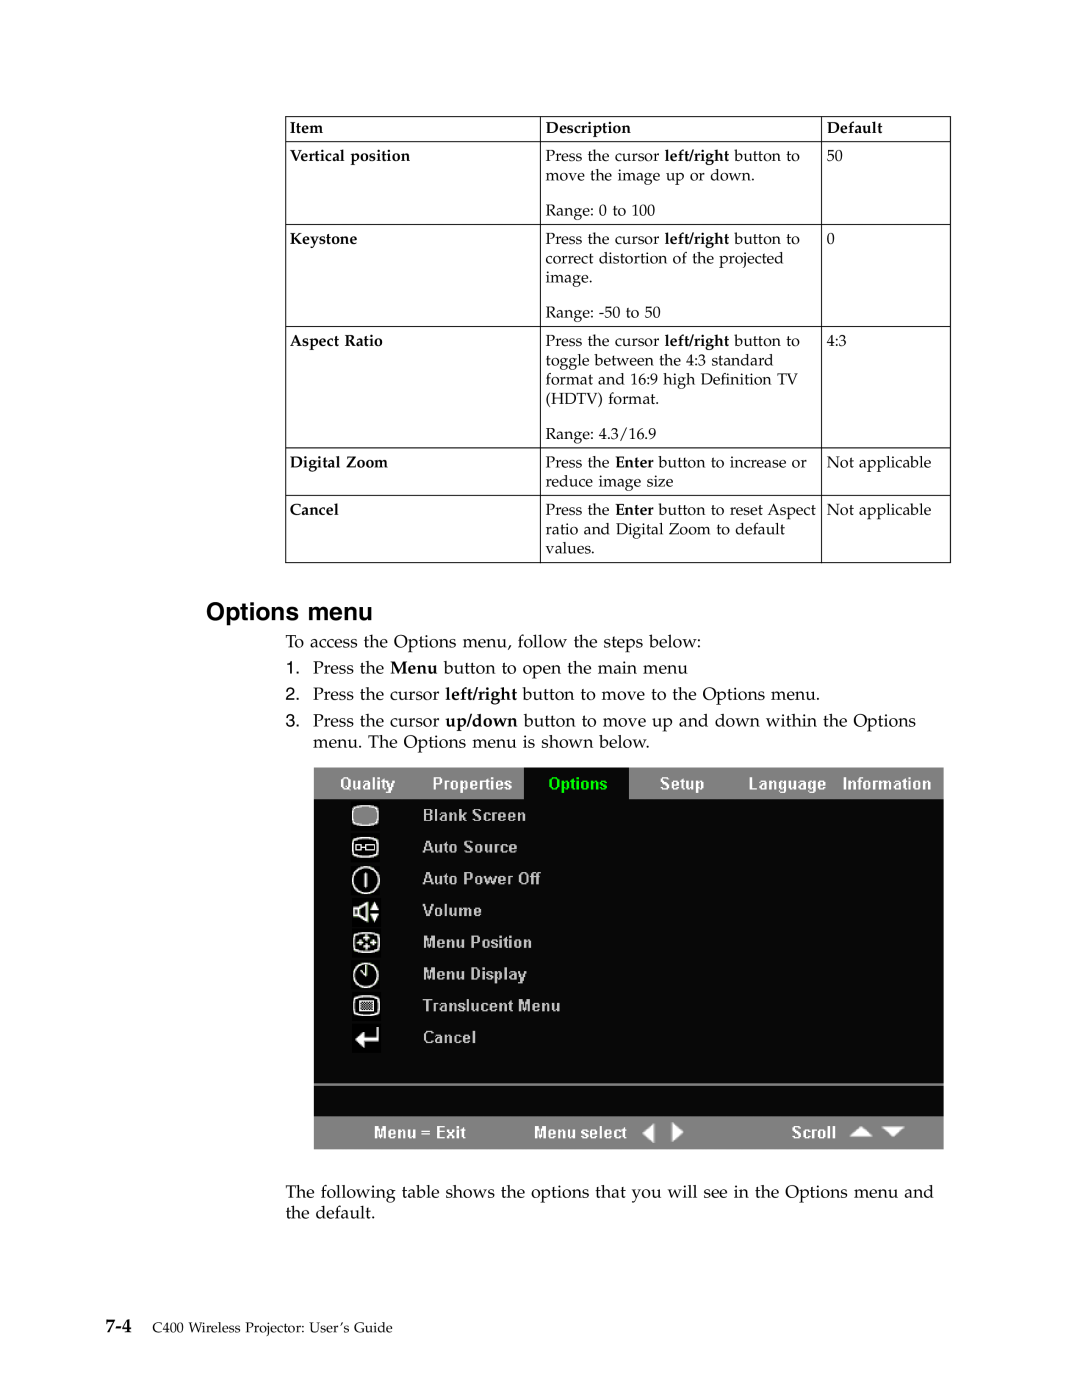 Lenovo C400 manual Options menu 